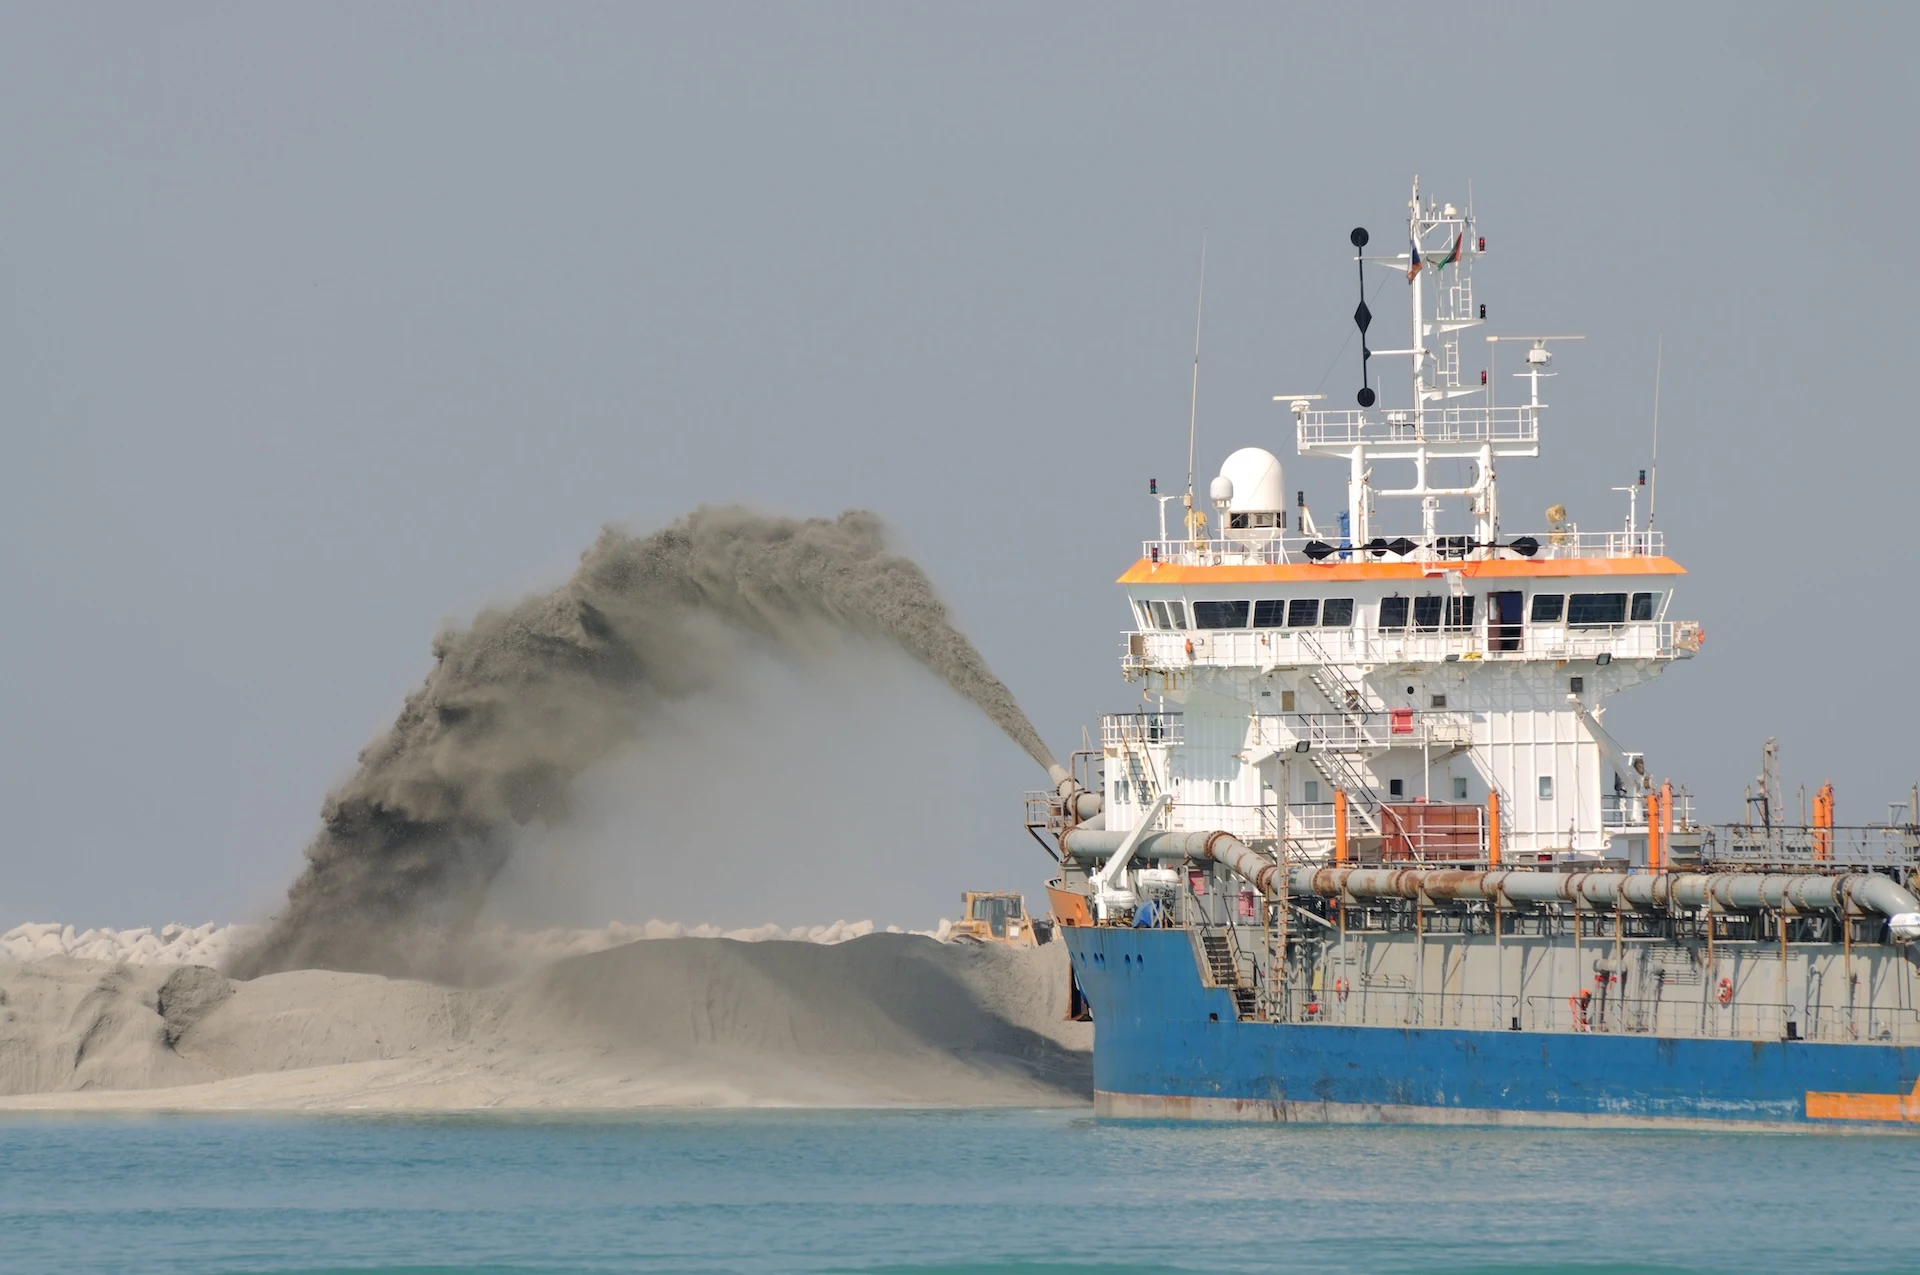 Dredge ship pushing sand to create new land.